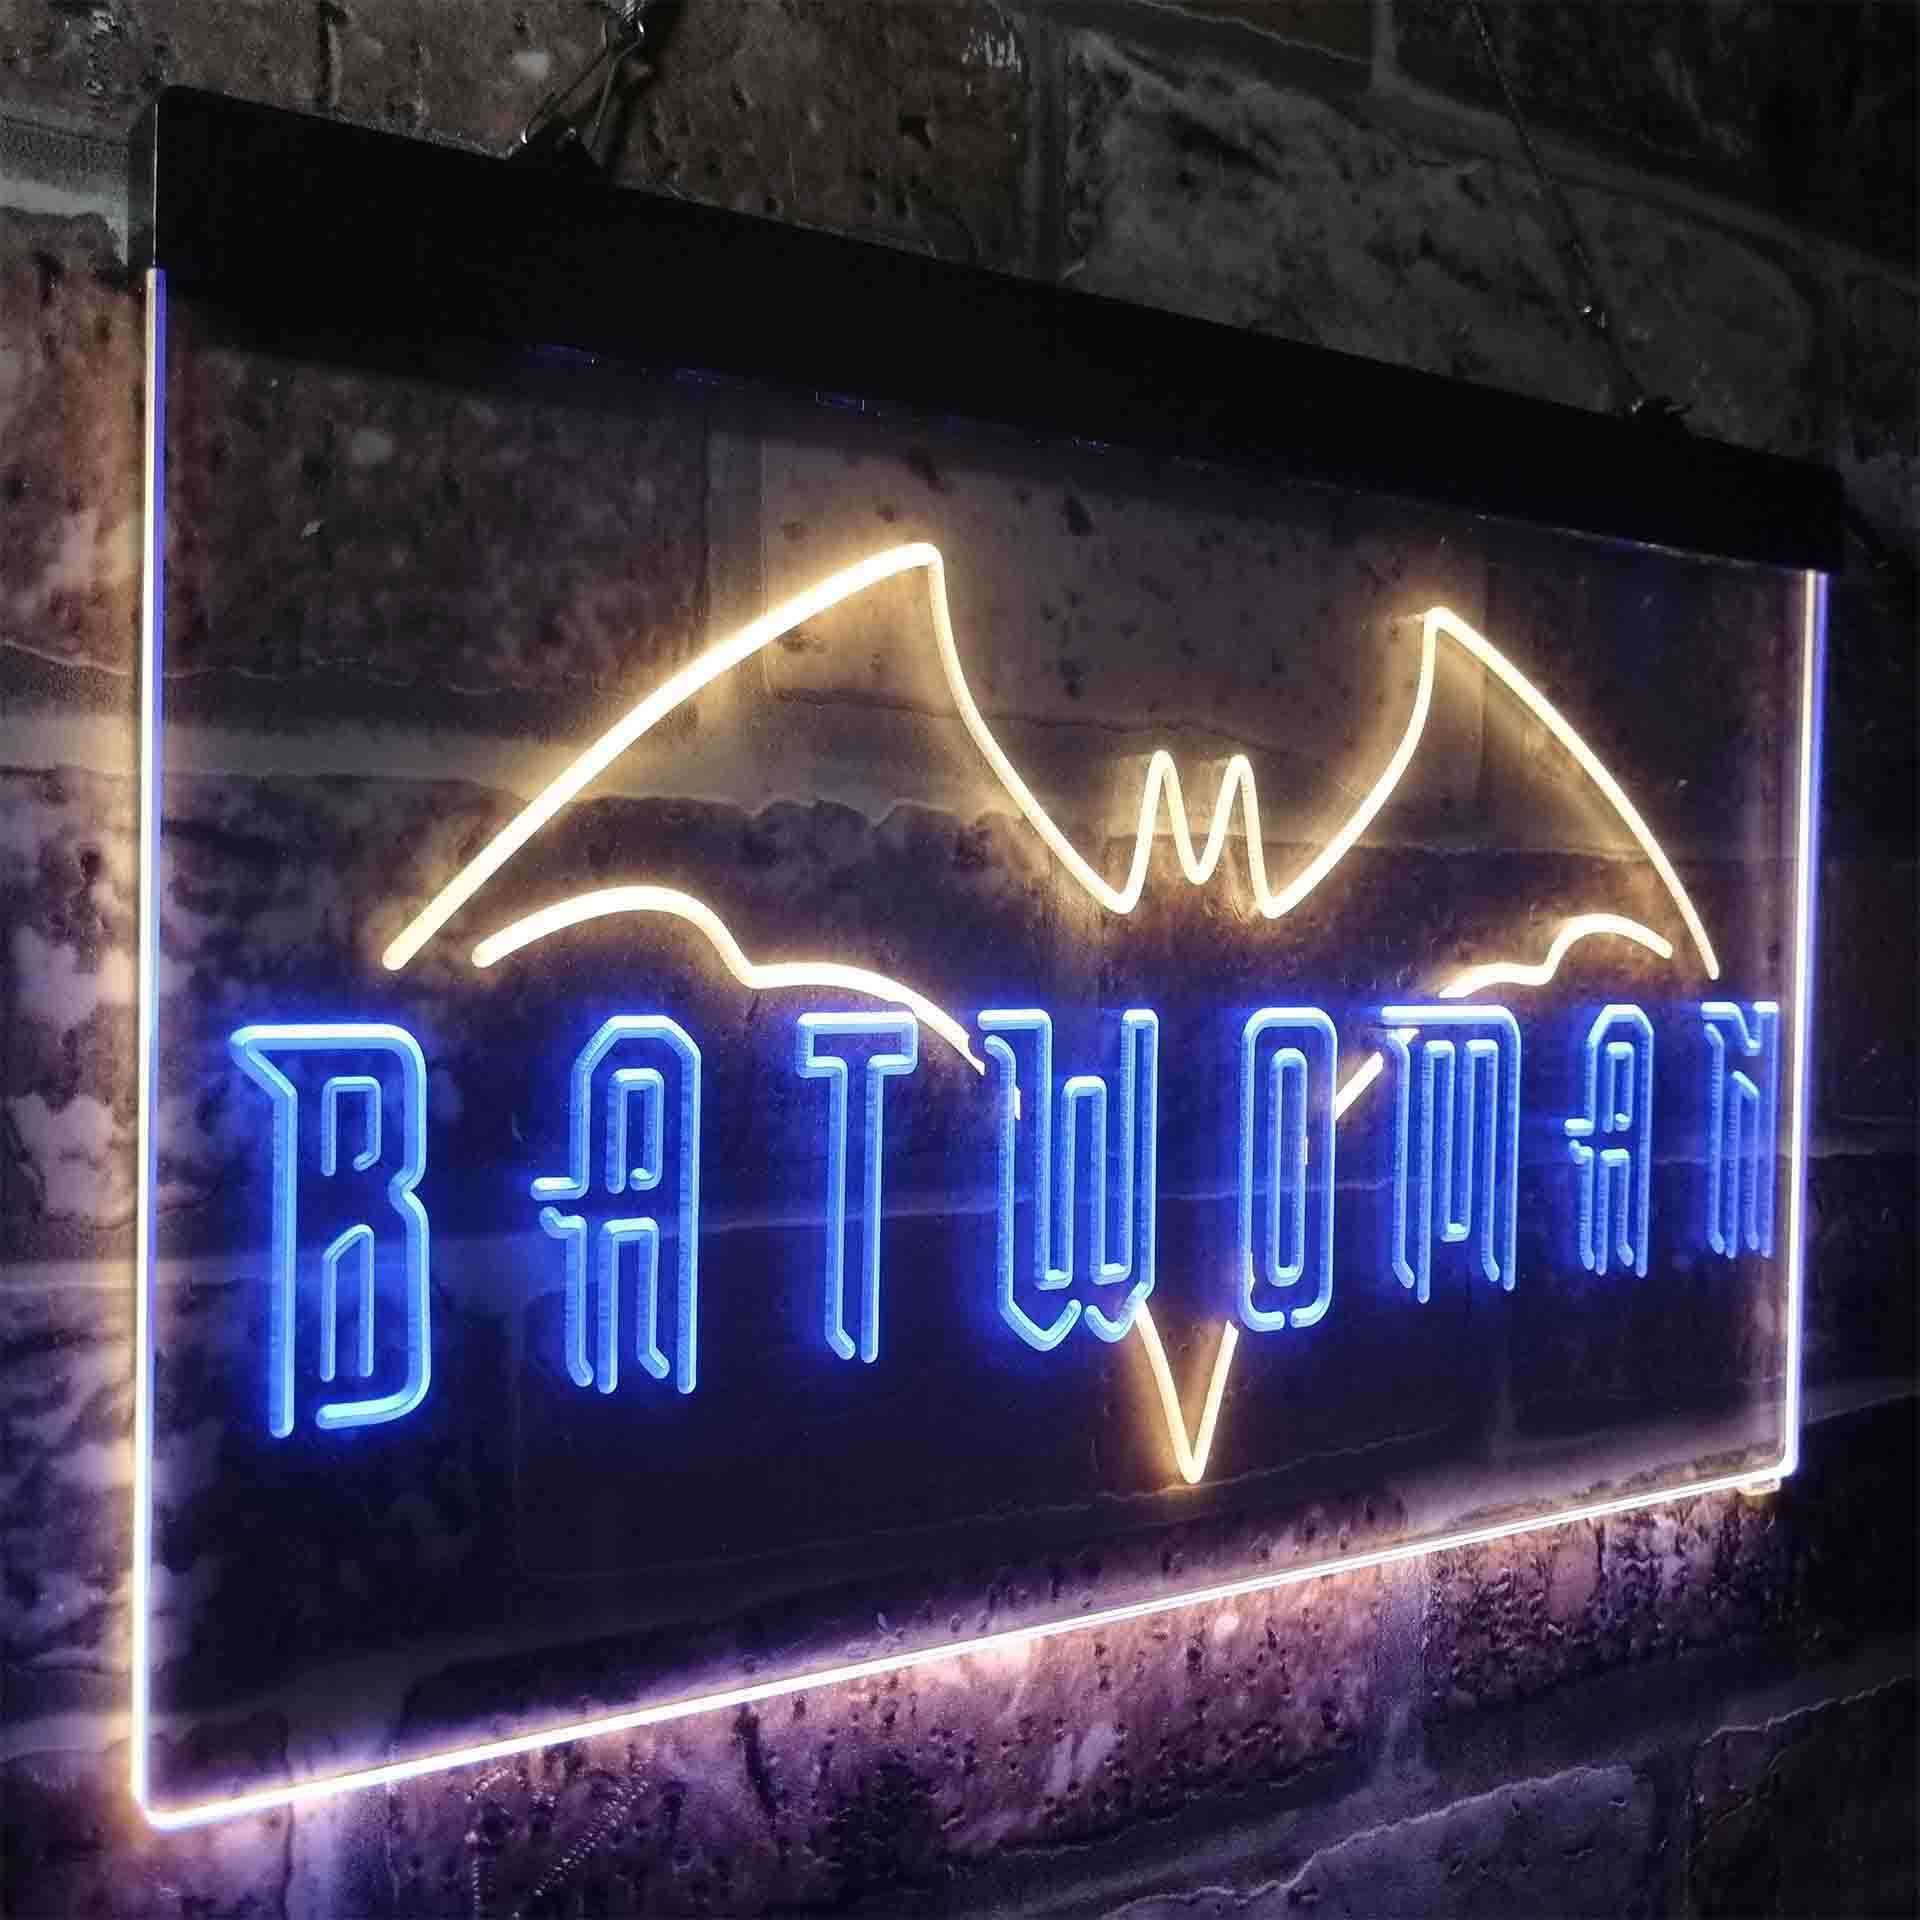 Batwoman Batman DC Neon LED Sign